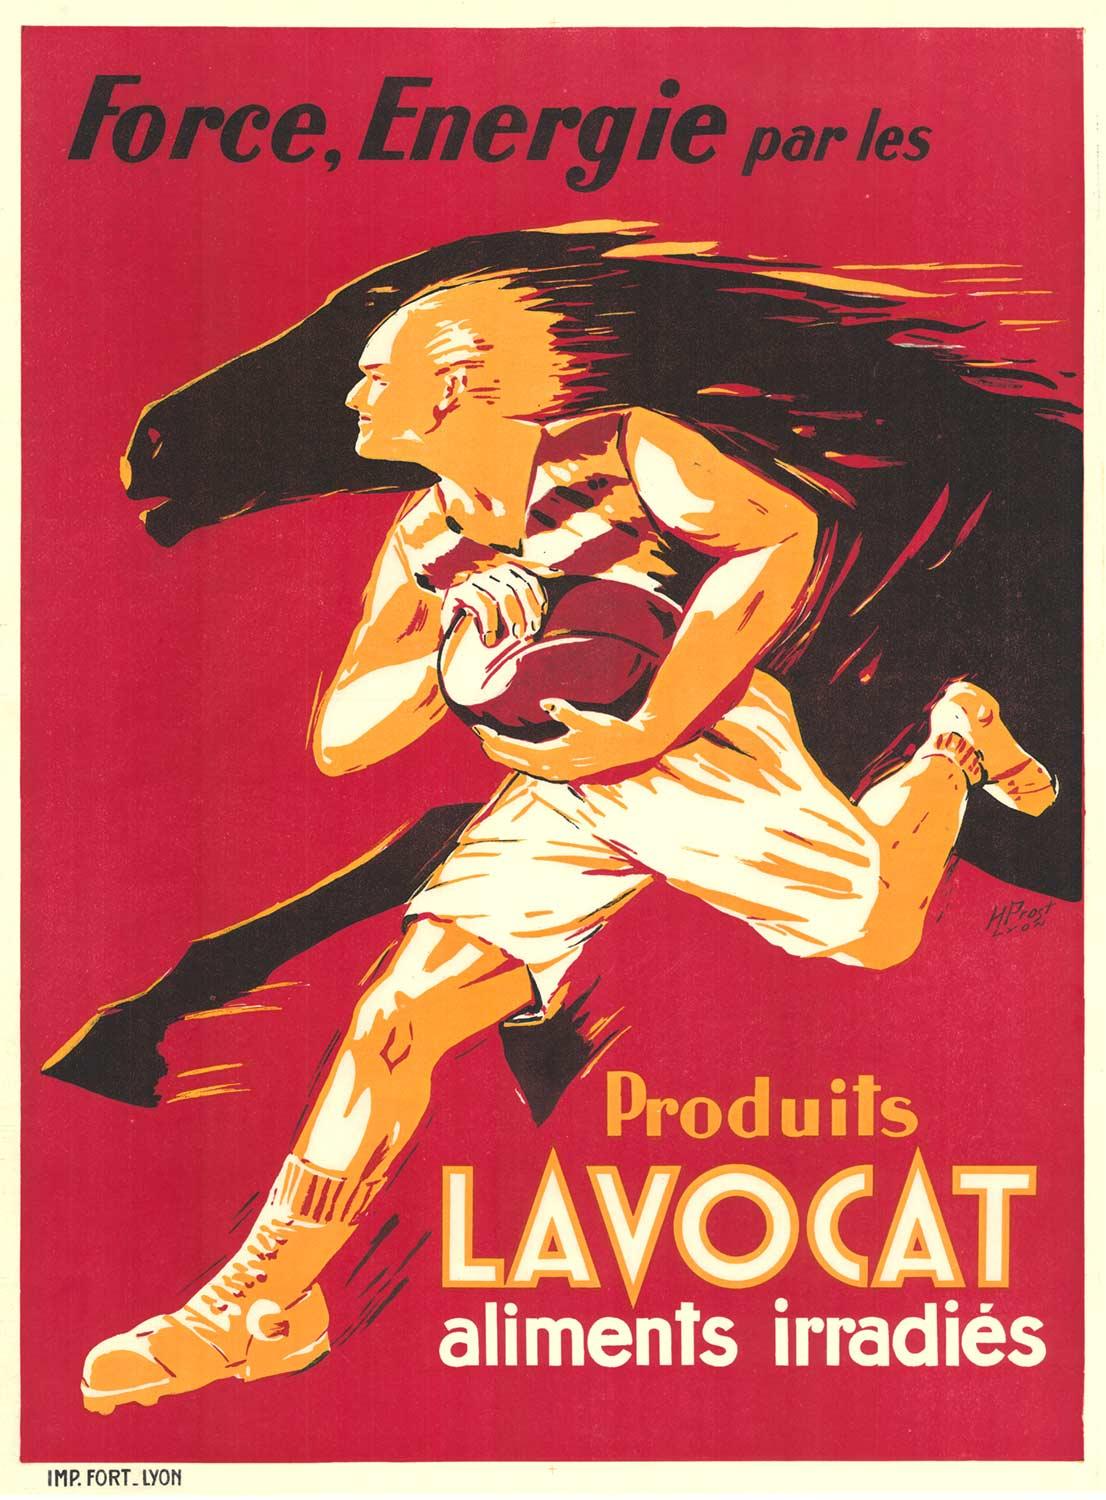 H. Prost Animal Print – Vintage-Poster „Produits Lavocat“ für Force and Energy